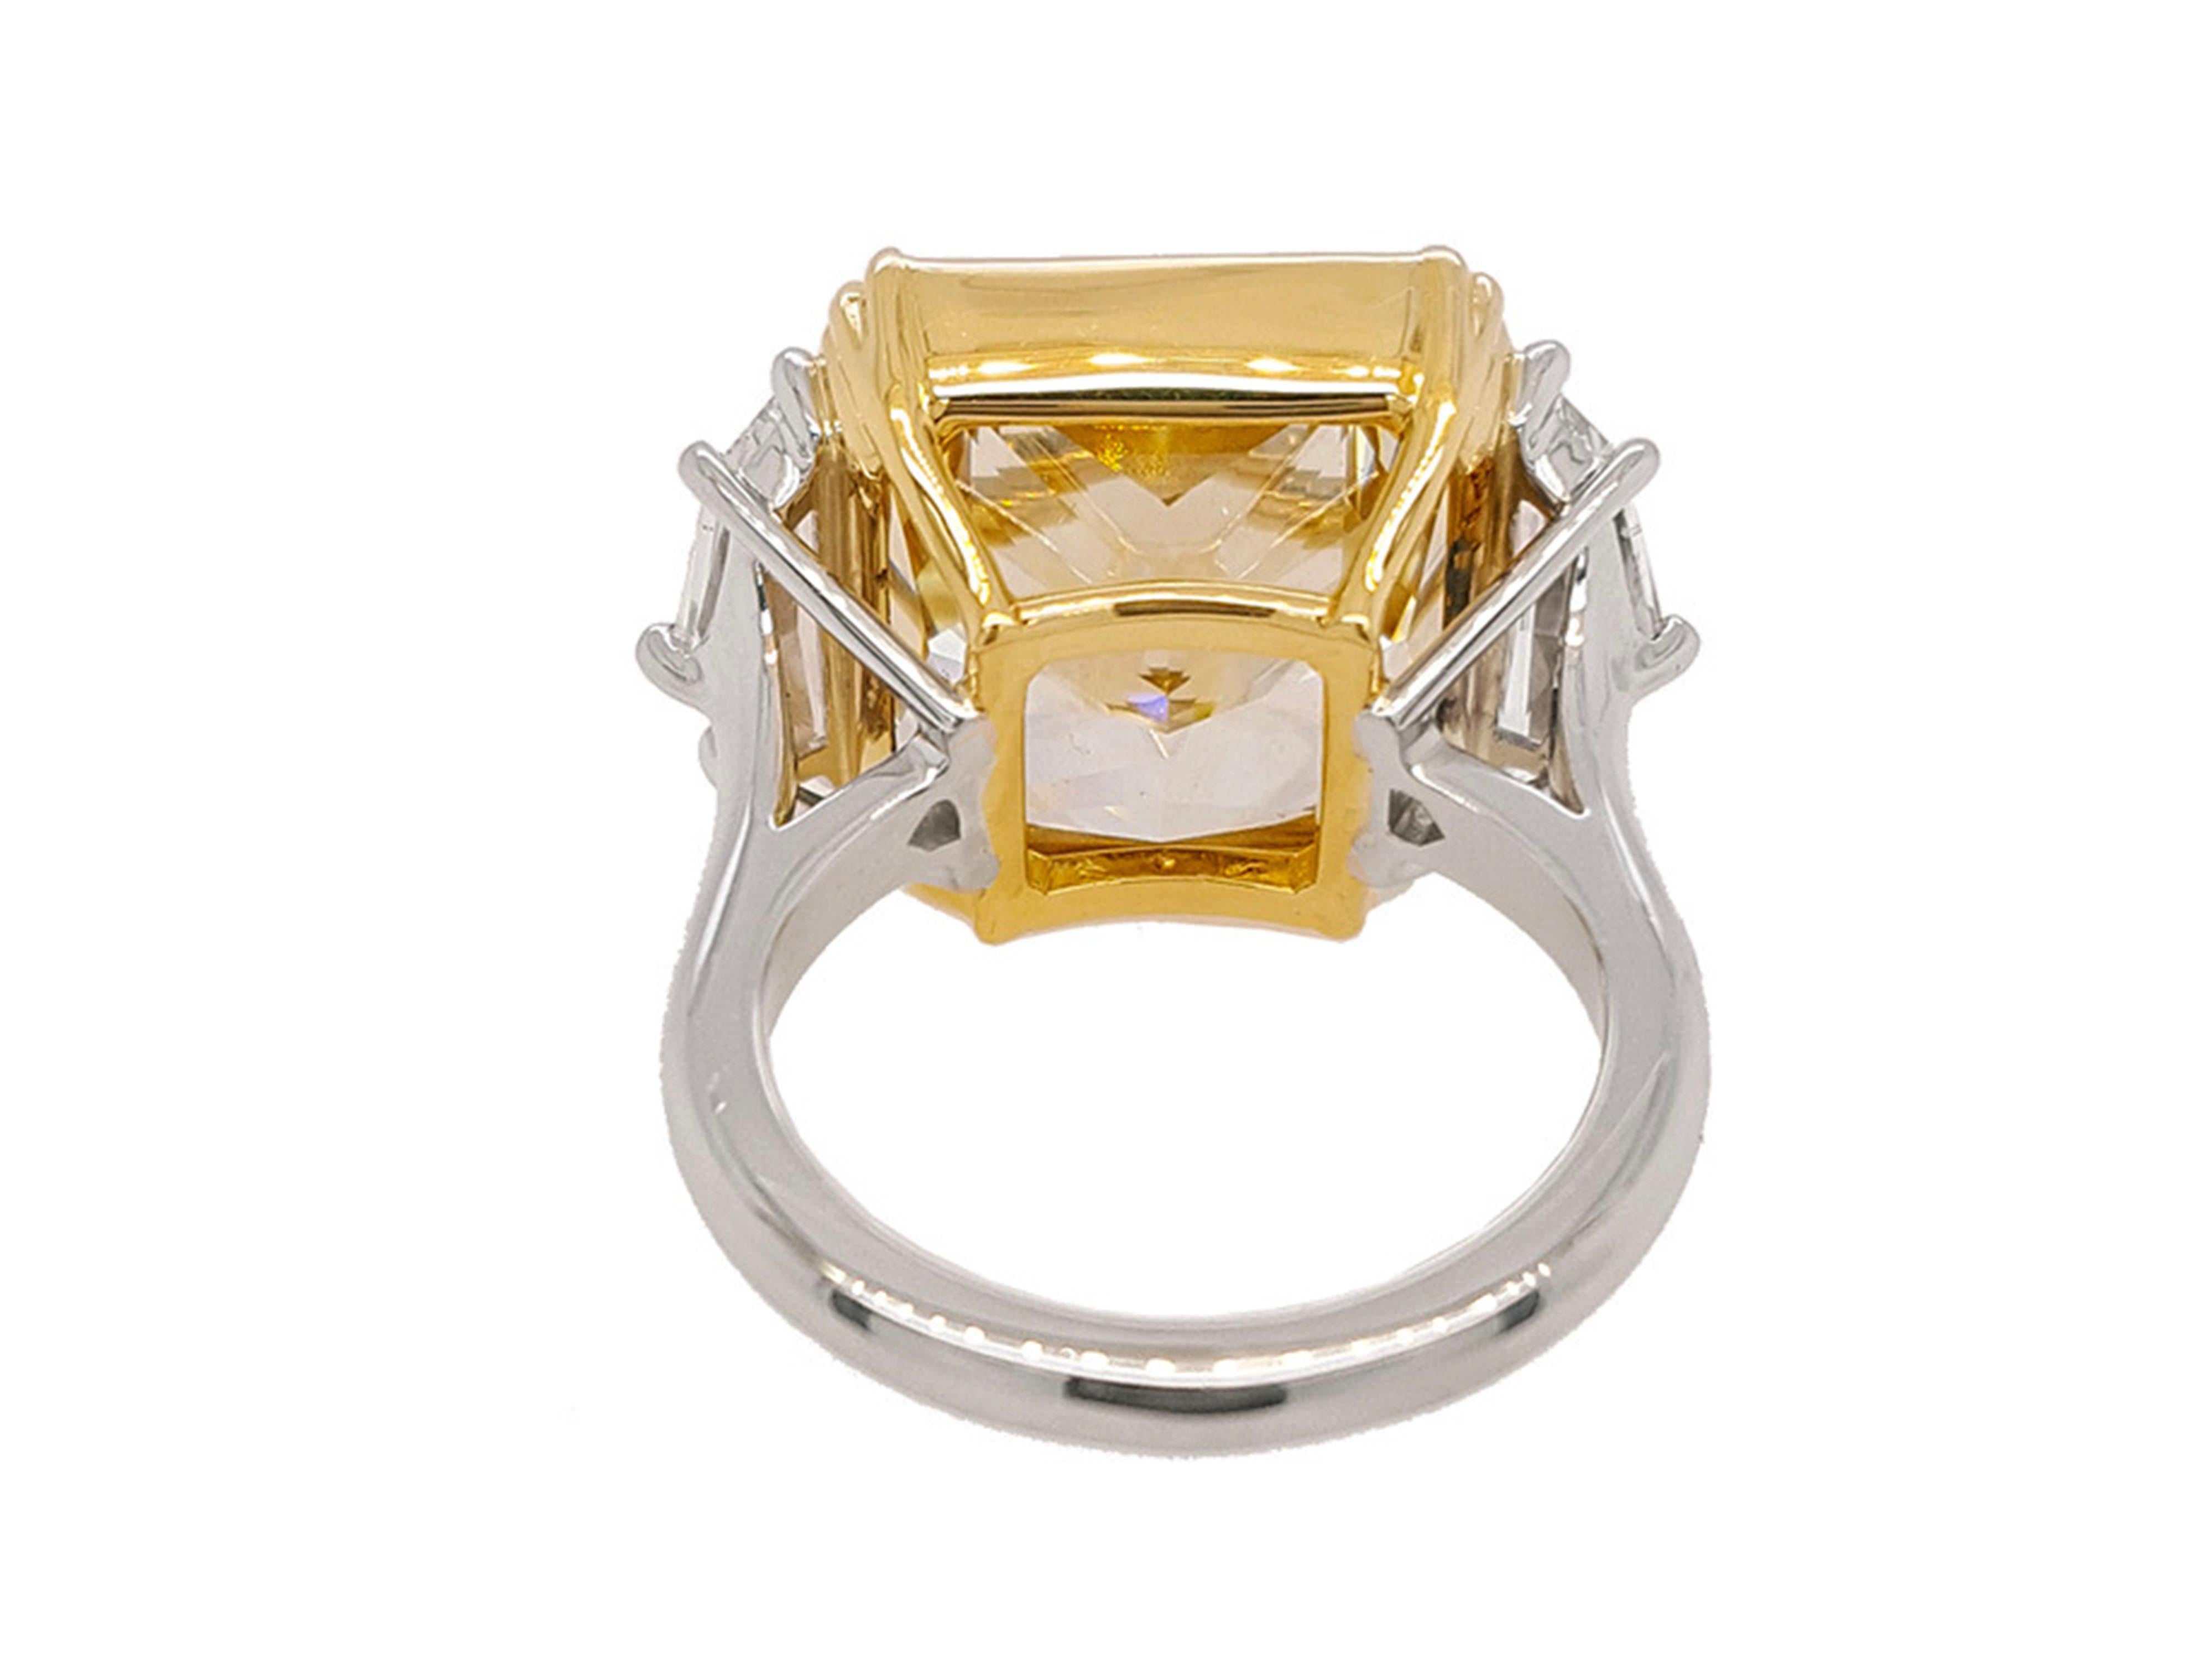 14 carat diamond ring